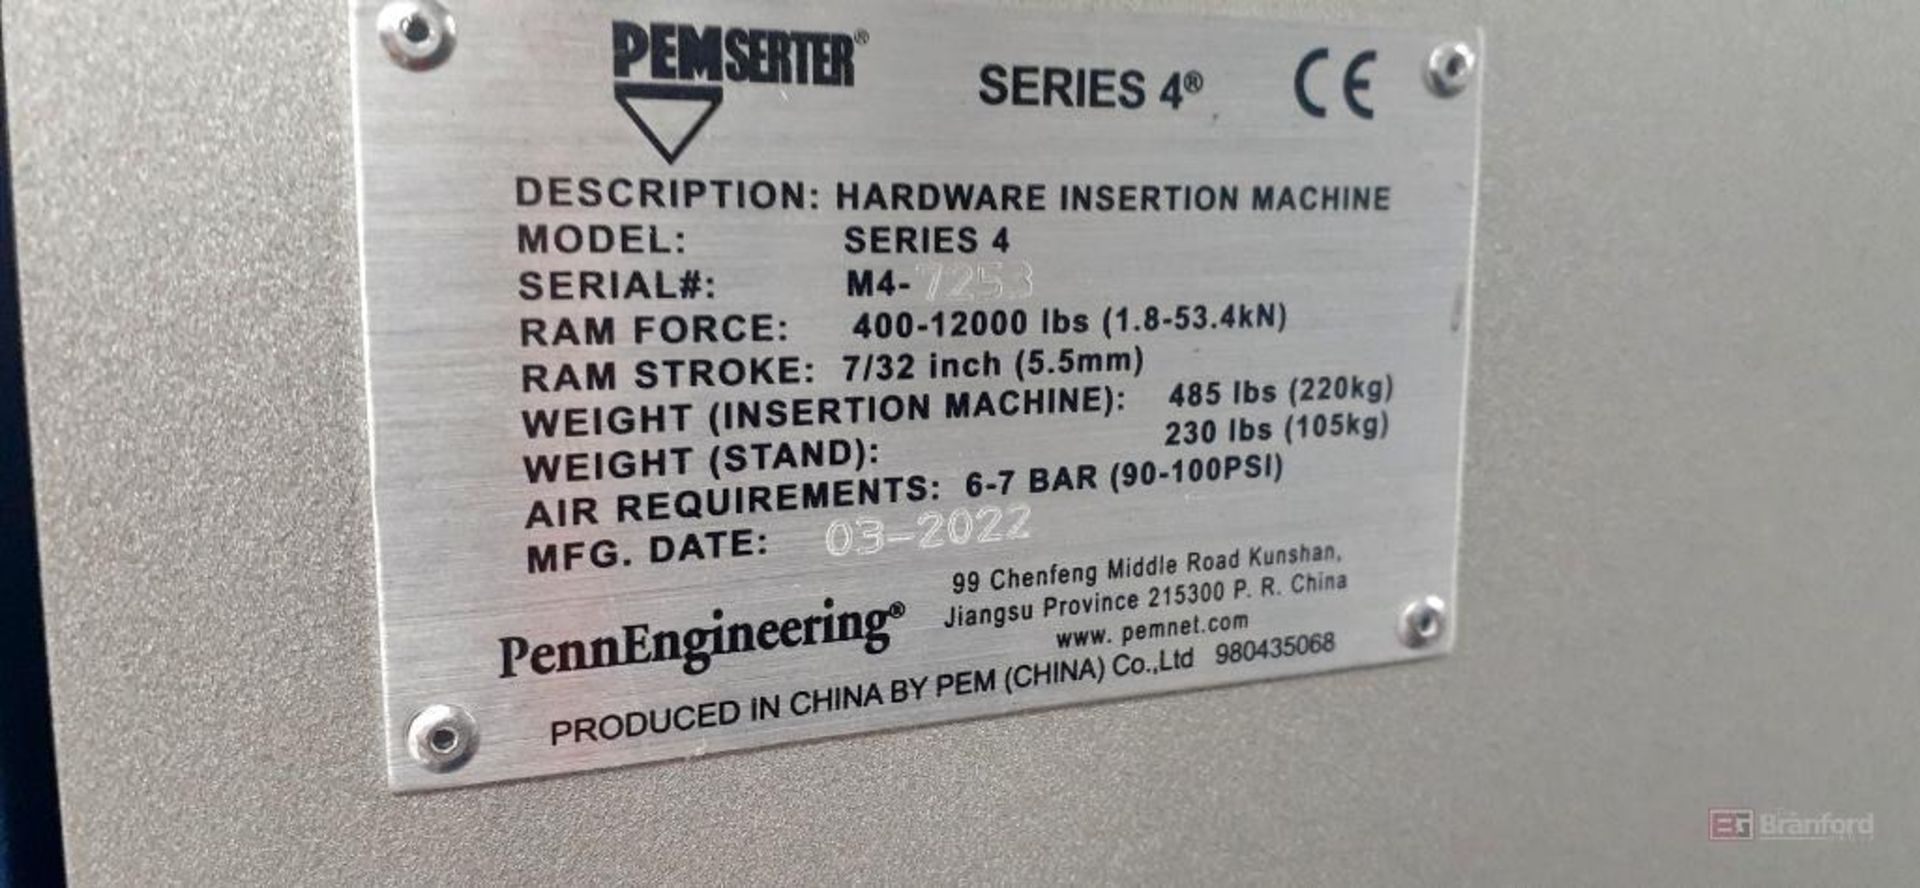 Penn Engineering Model Pemserter M4 Series 4, 6-Ton Pneumatic Insertion Press - Image 7 of 7